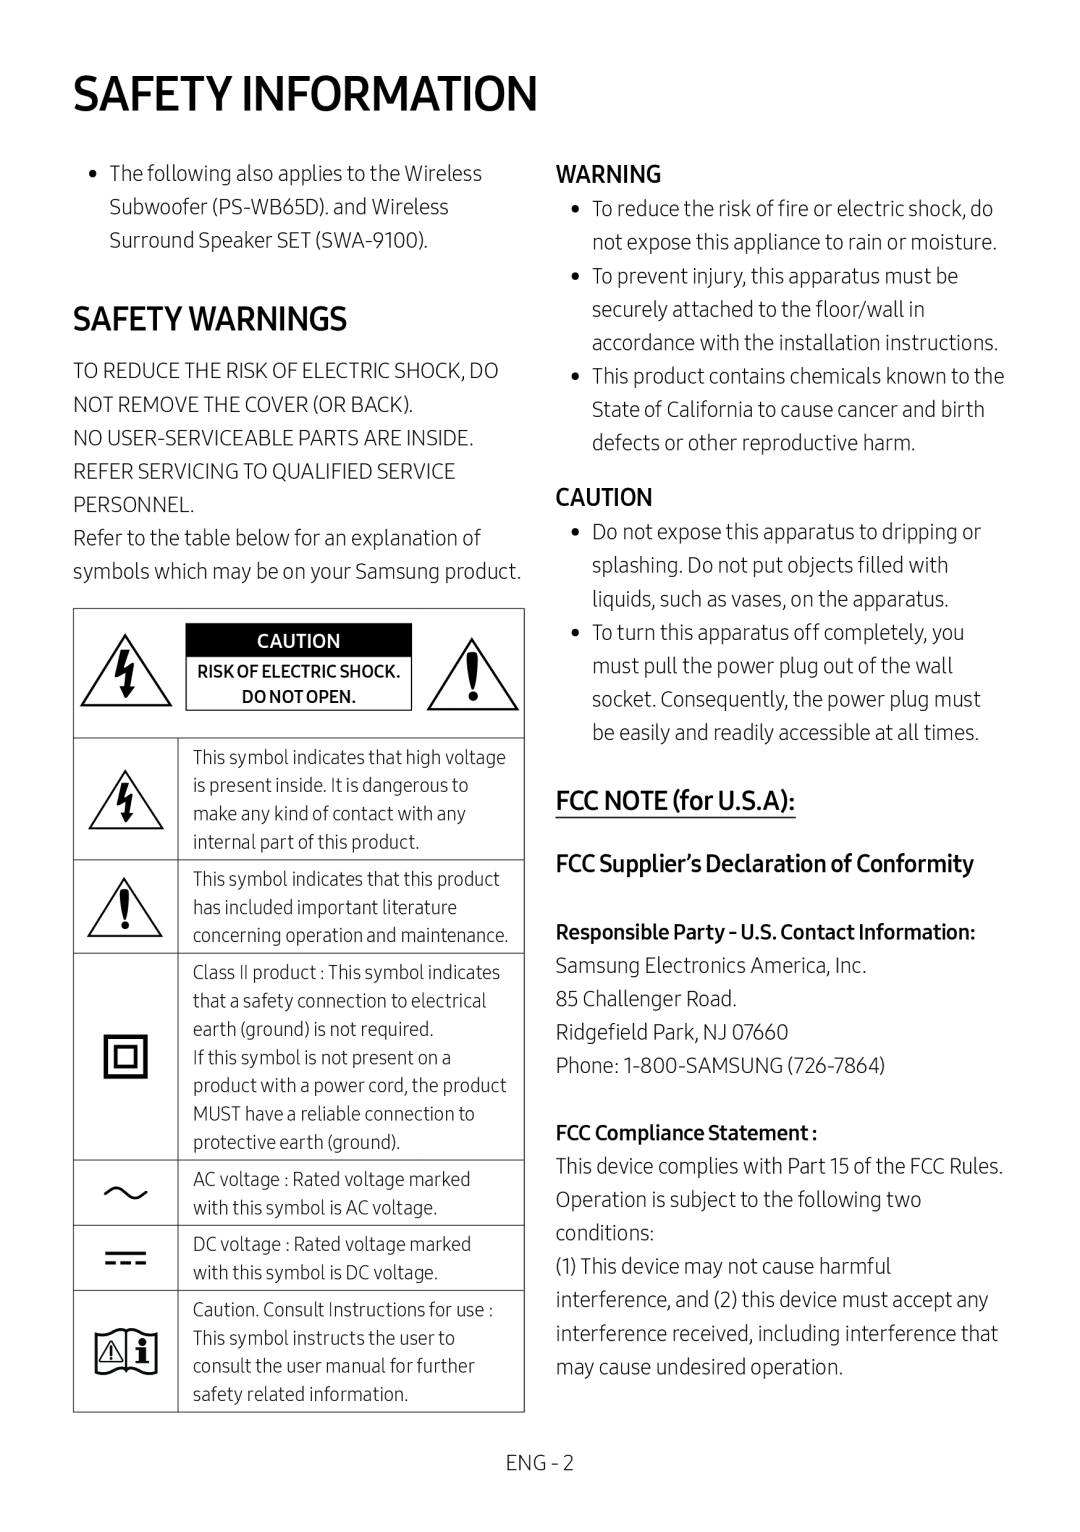 SAFETY WARNINGS Standard HW-B67C